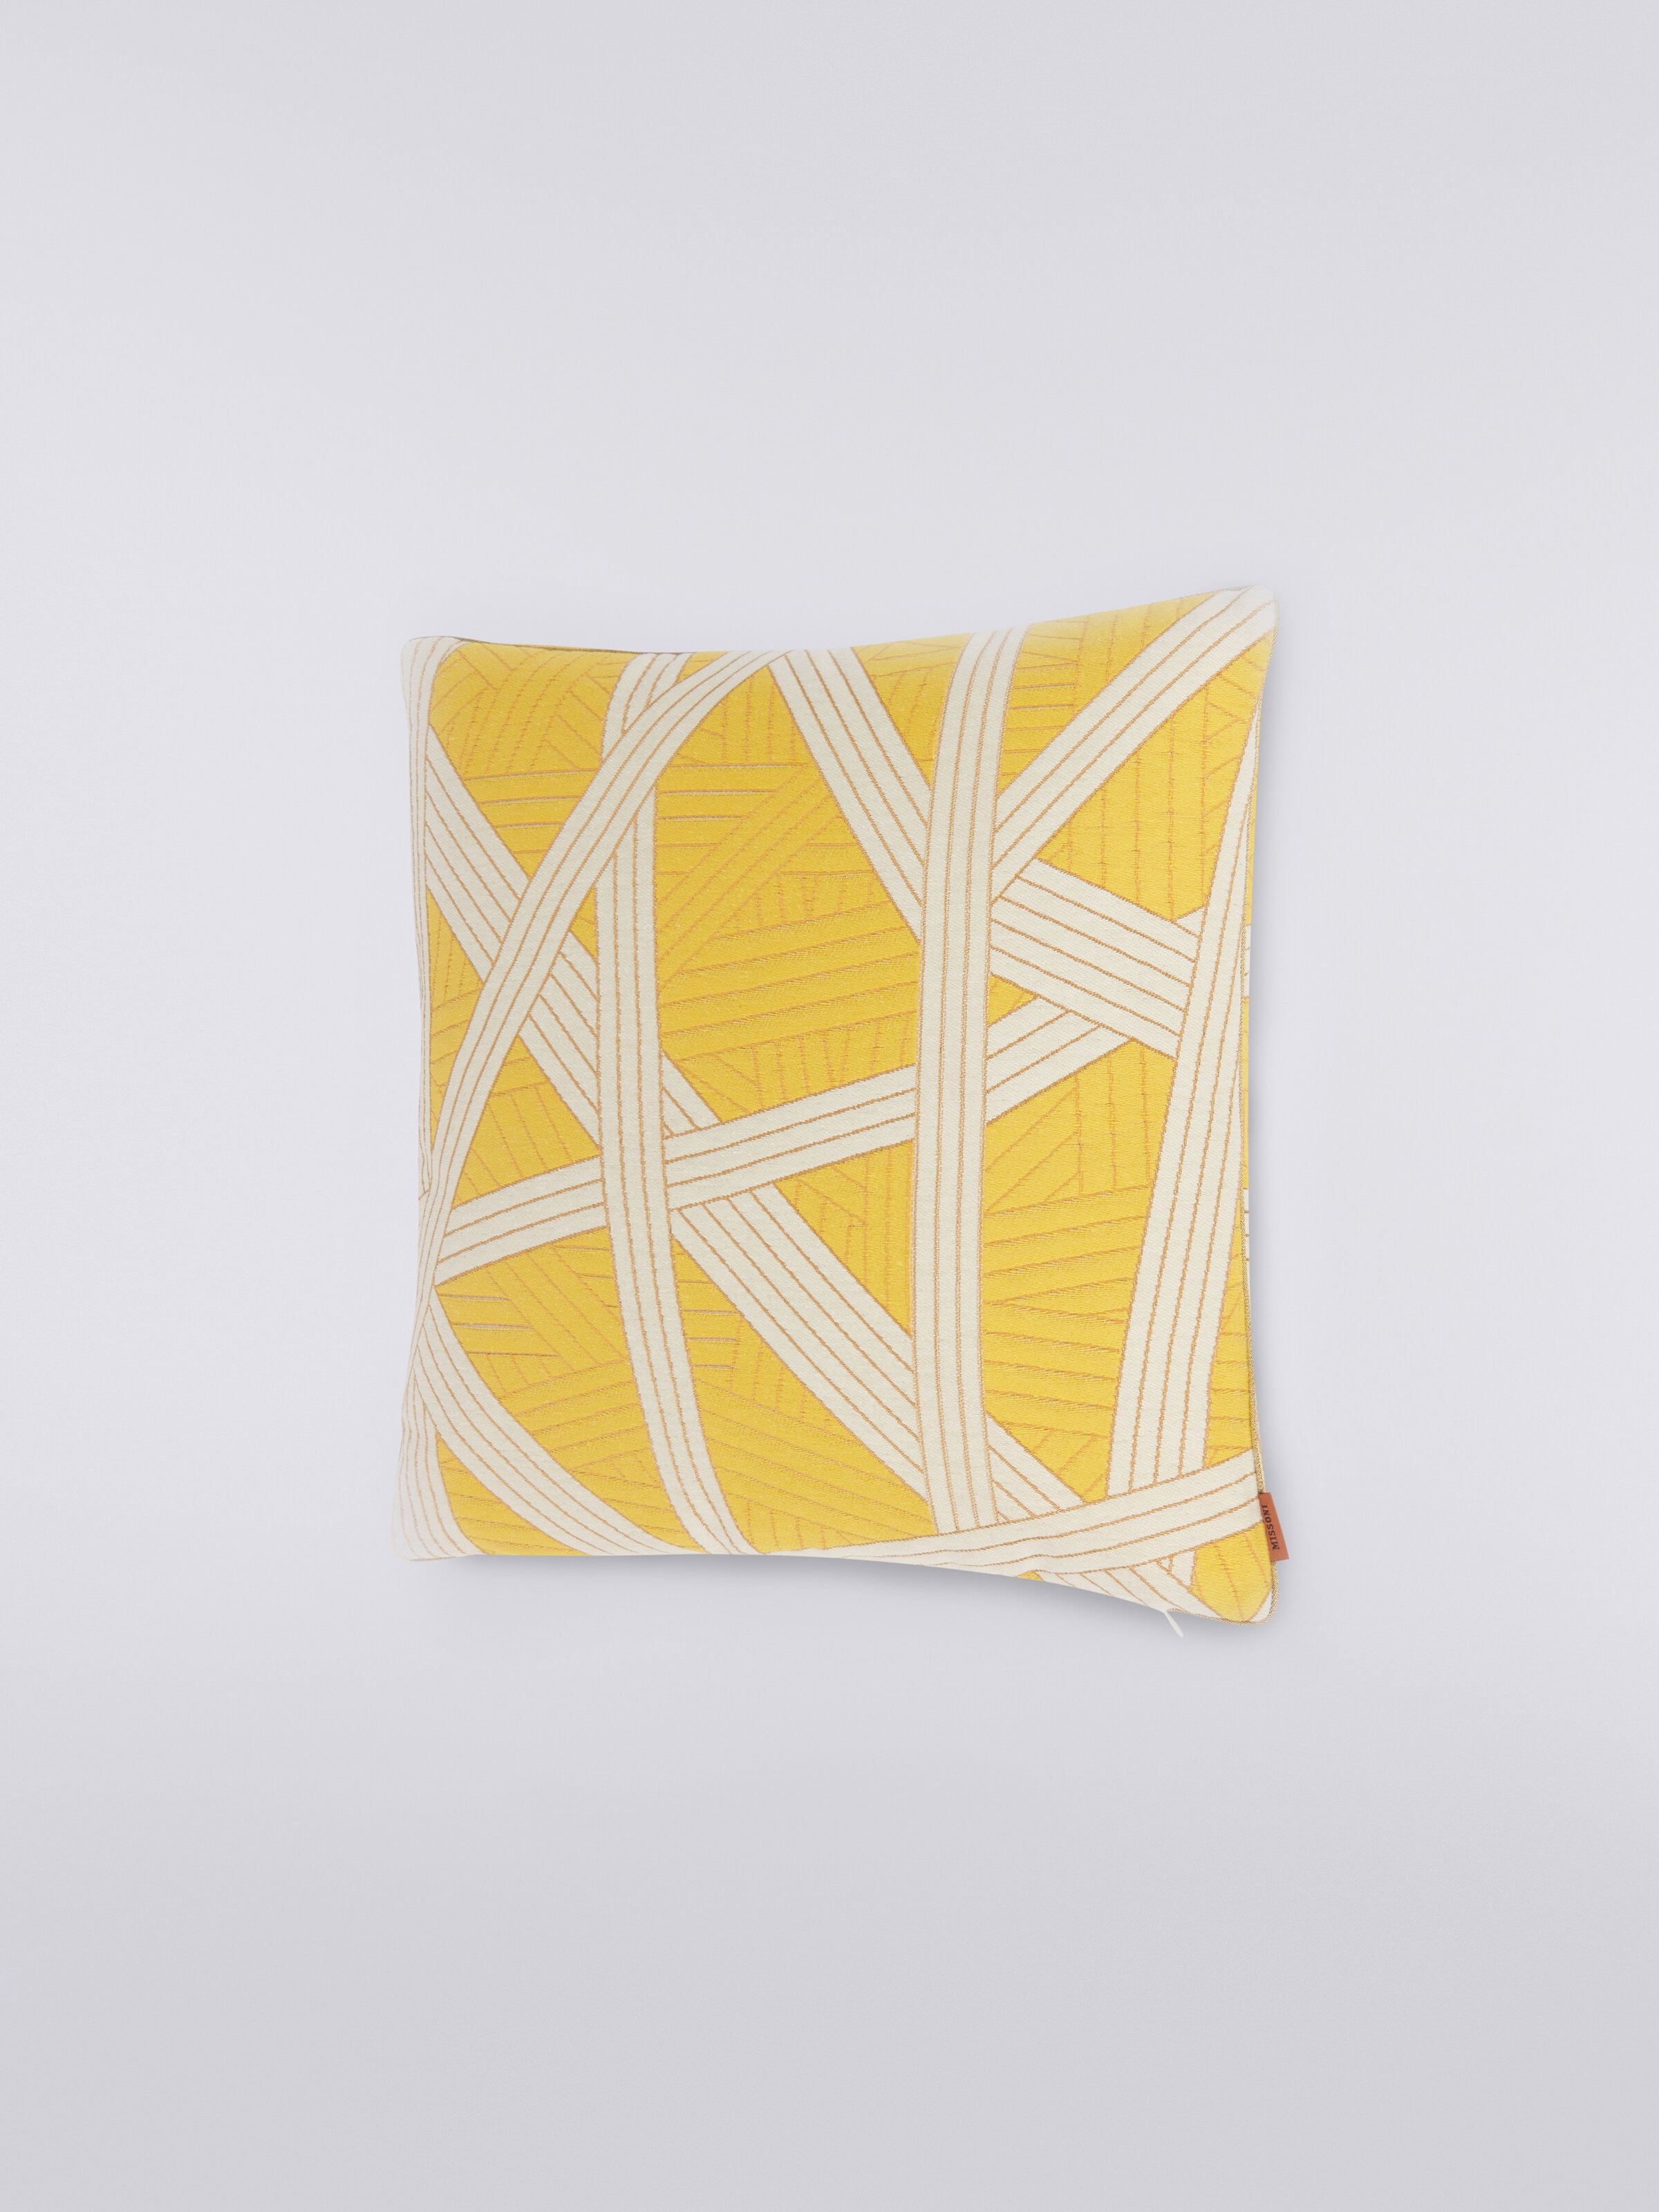 Nastri cushion 40x40 cm with stitching, Yellow  - 1